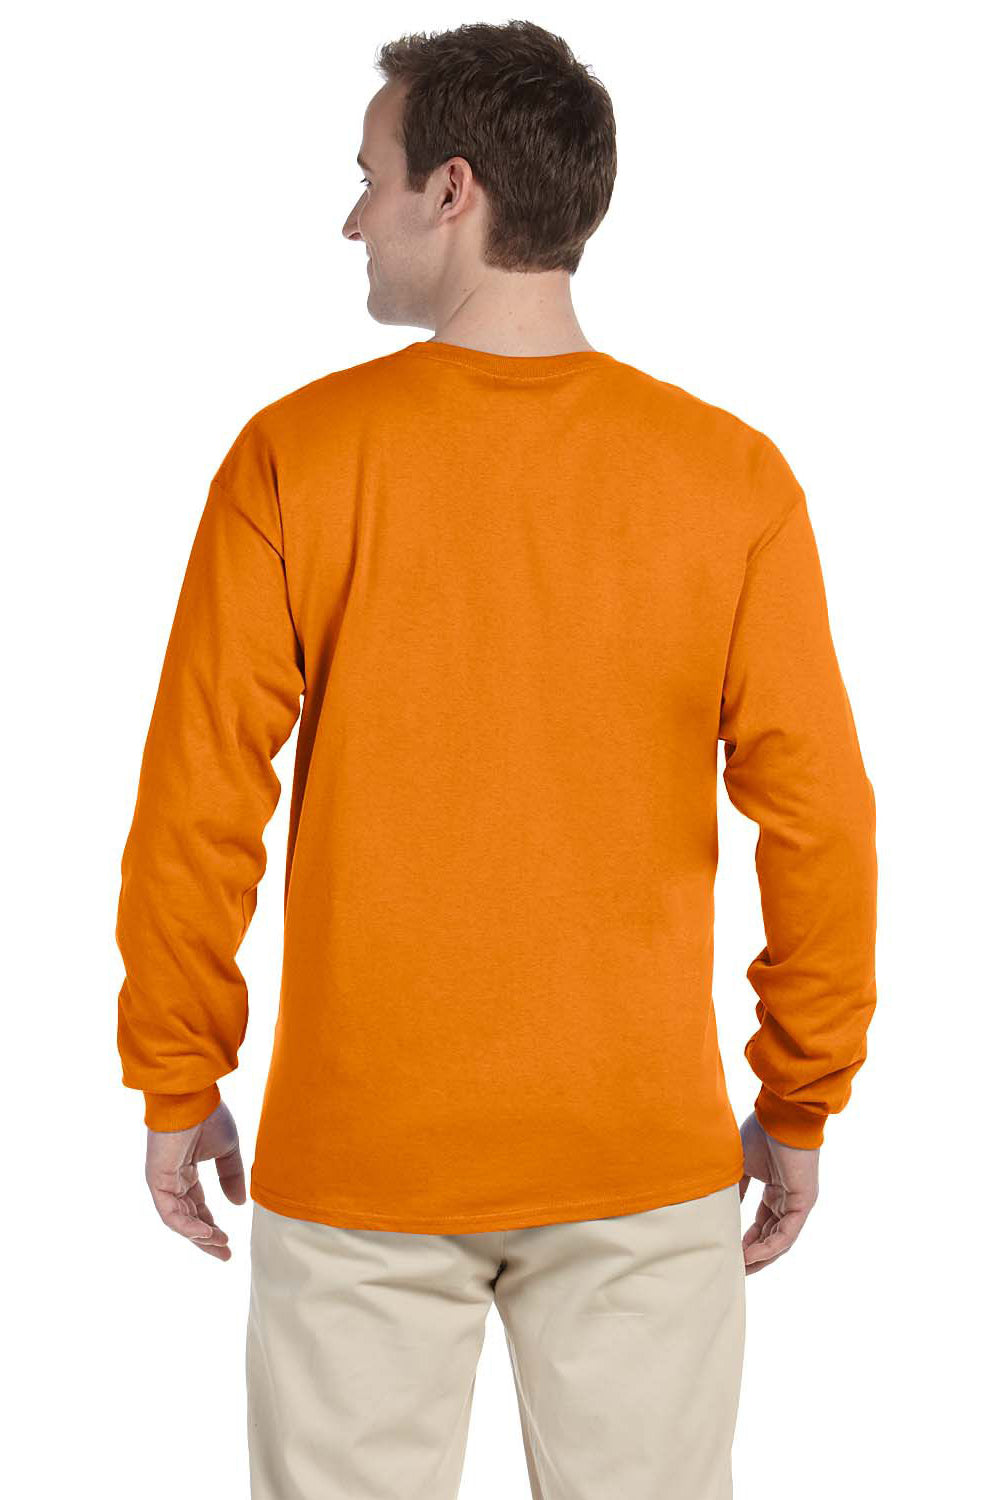 Fruit Of The Loom 4930 Mens HD Jersey Long Sleeve Crewneck T-Shirt Tennessee Orange Back